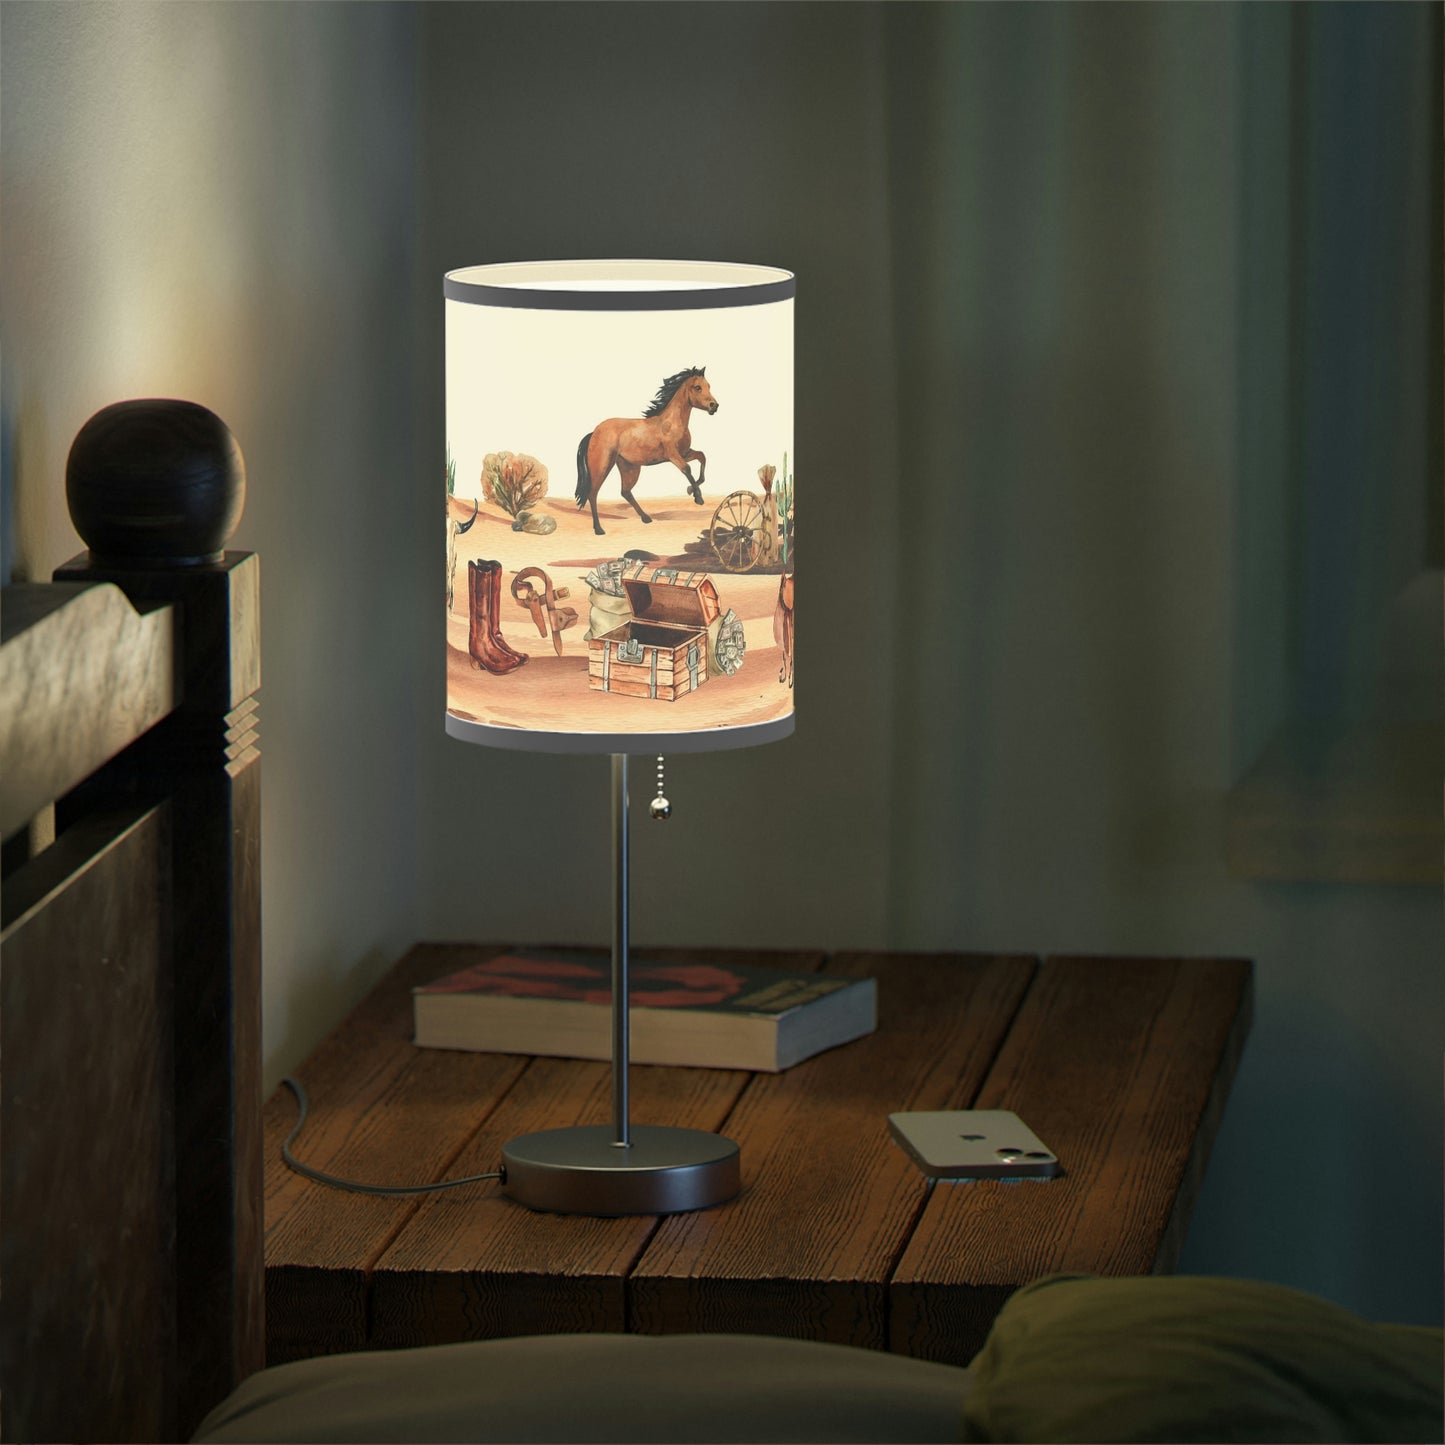 Cowboy lamp, Cowboy baby room decor - Cowboy life